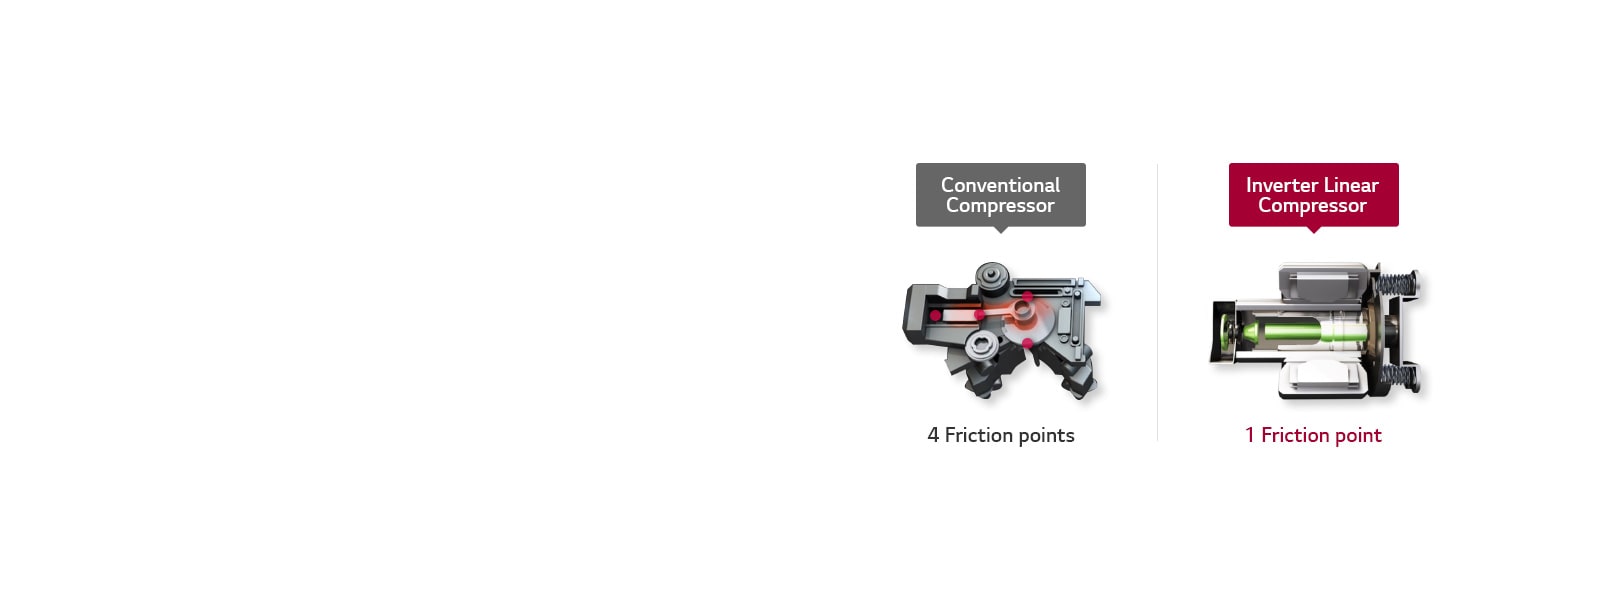 Why Inverter Linear Compressor?1